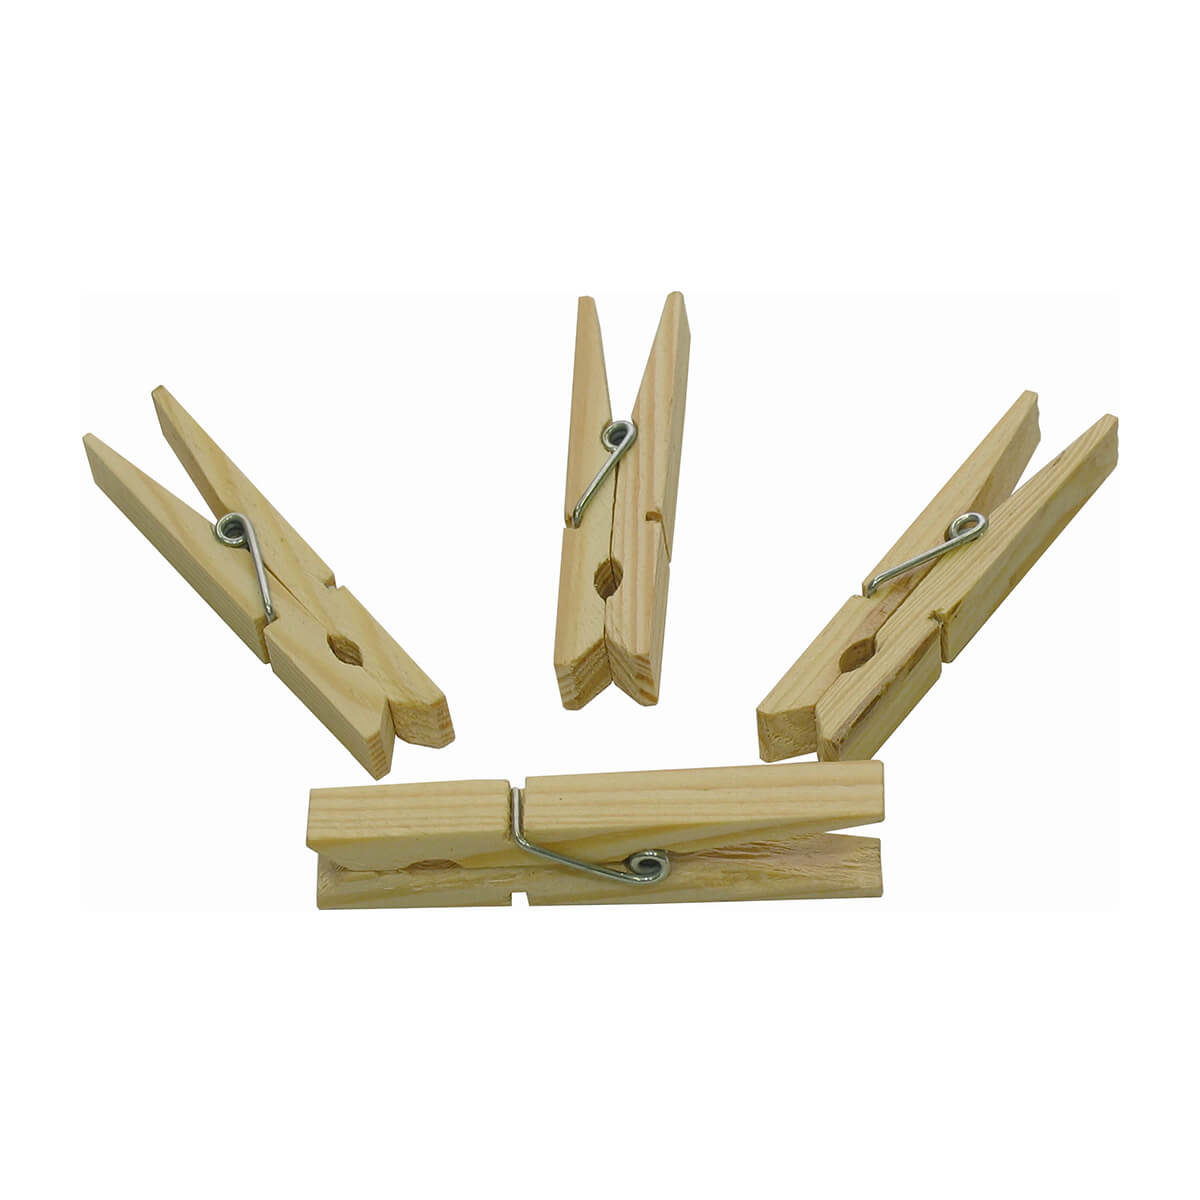 Wooden Clothespins - 50 / Bag